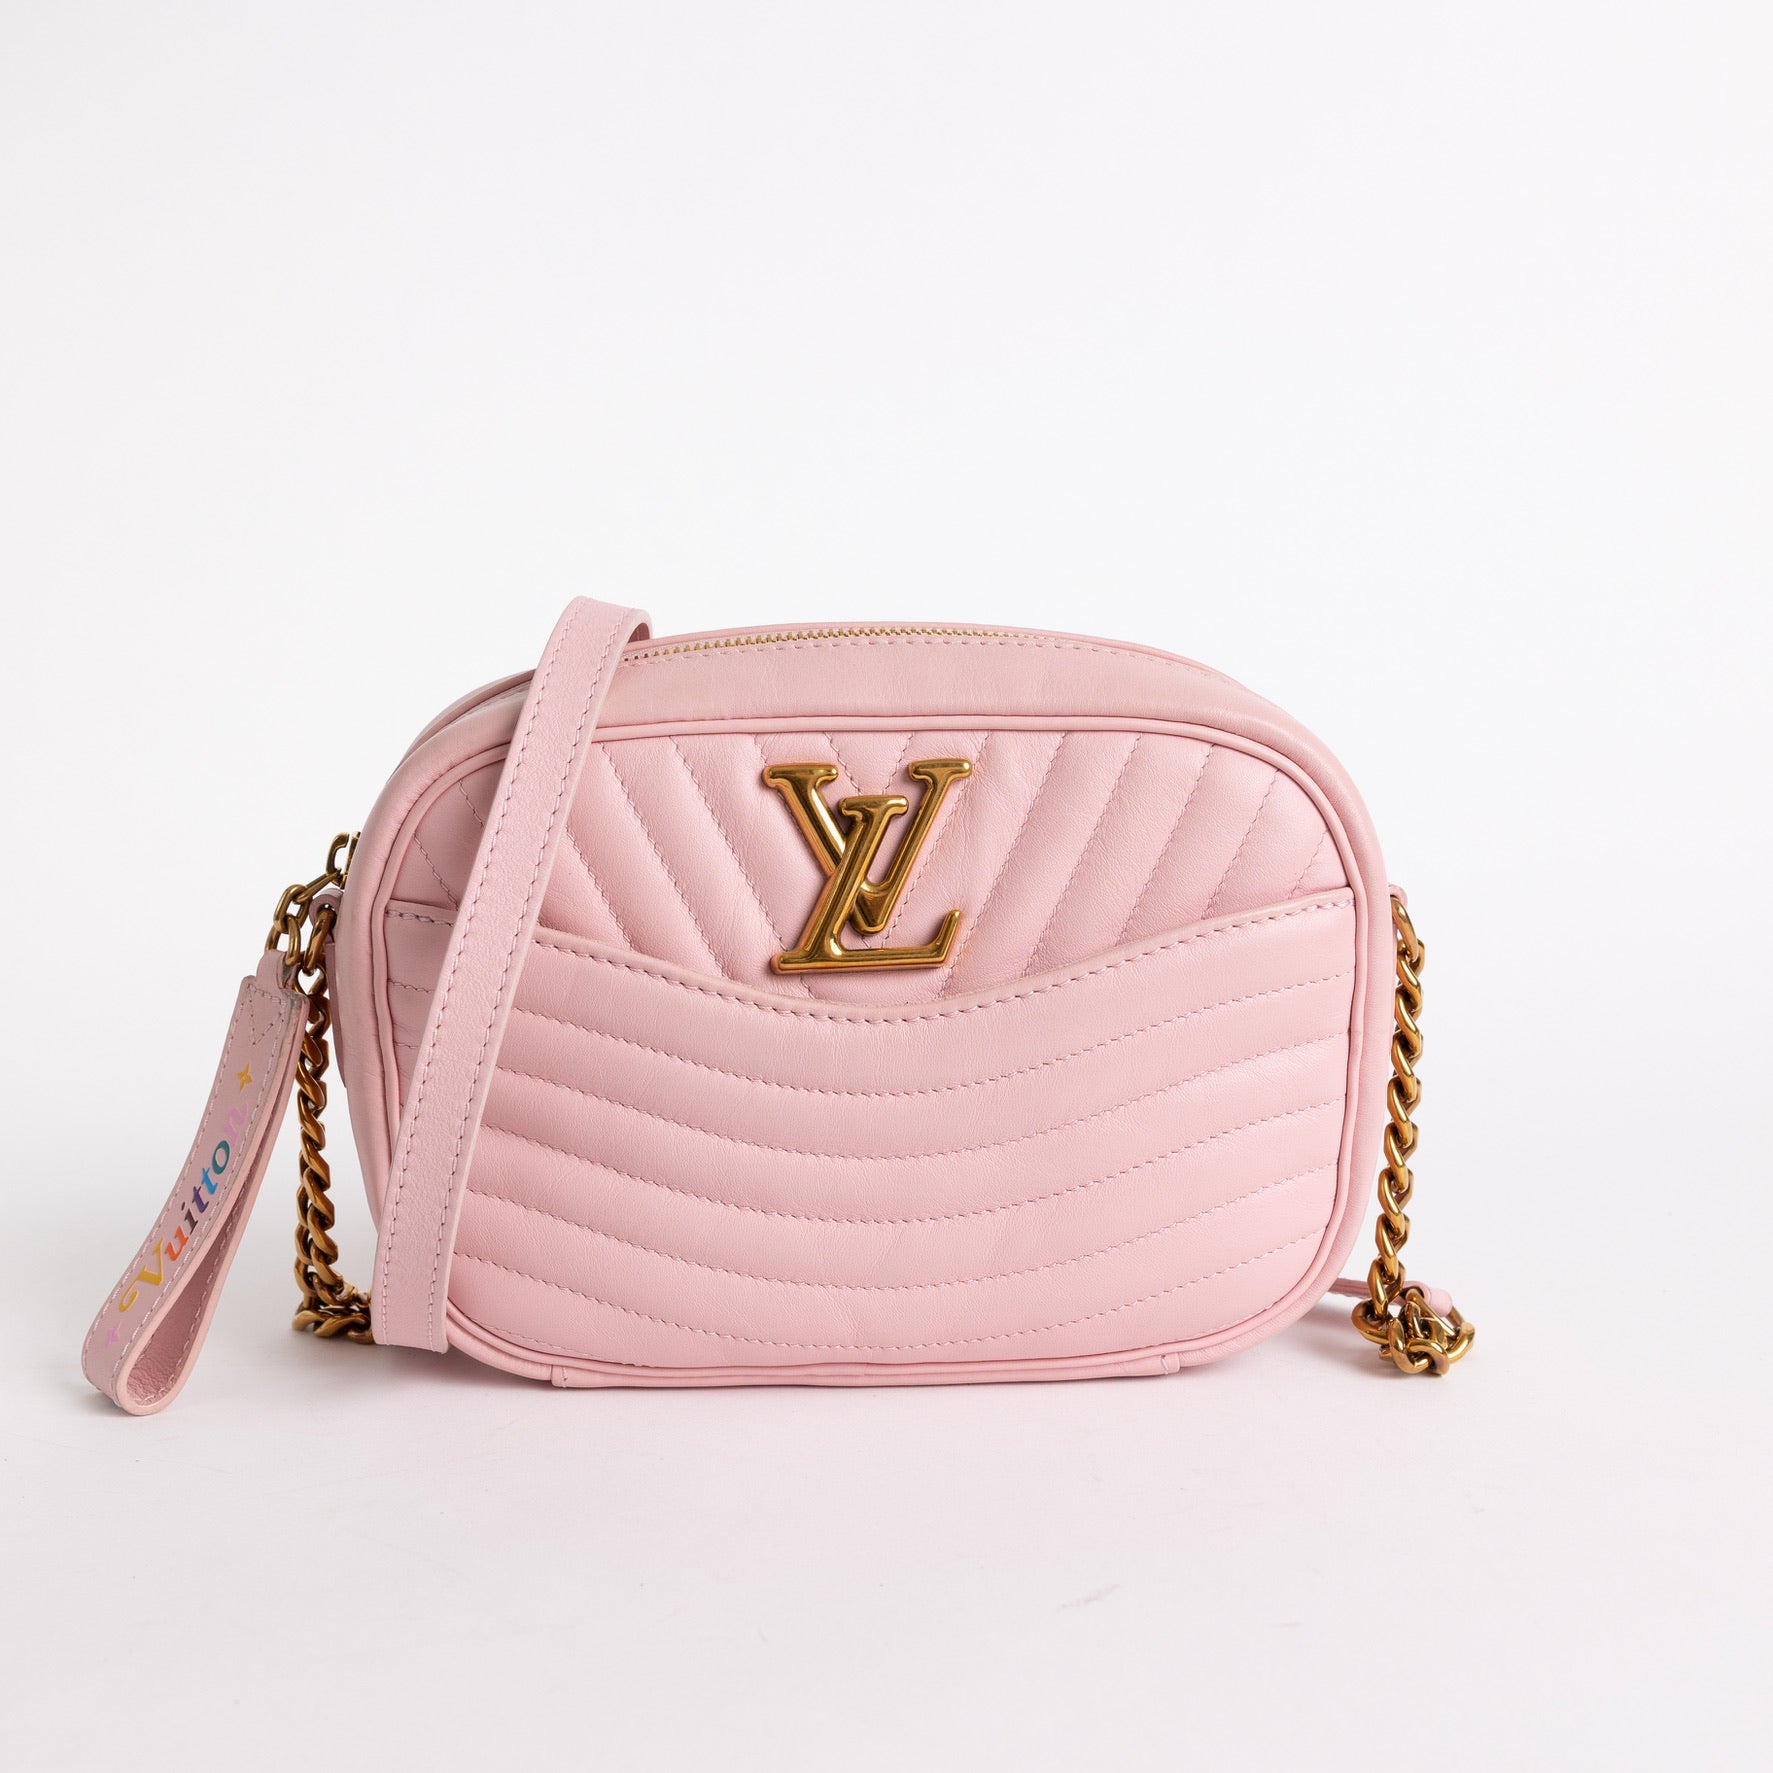 Louis Vuitton New Wave Camera Bag